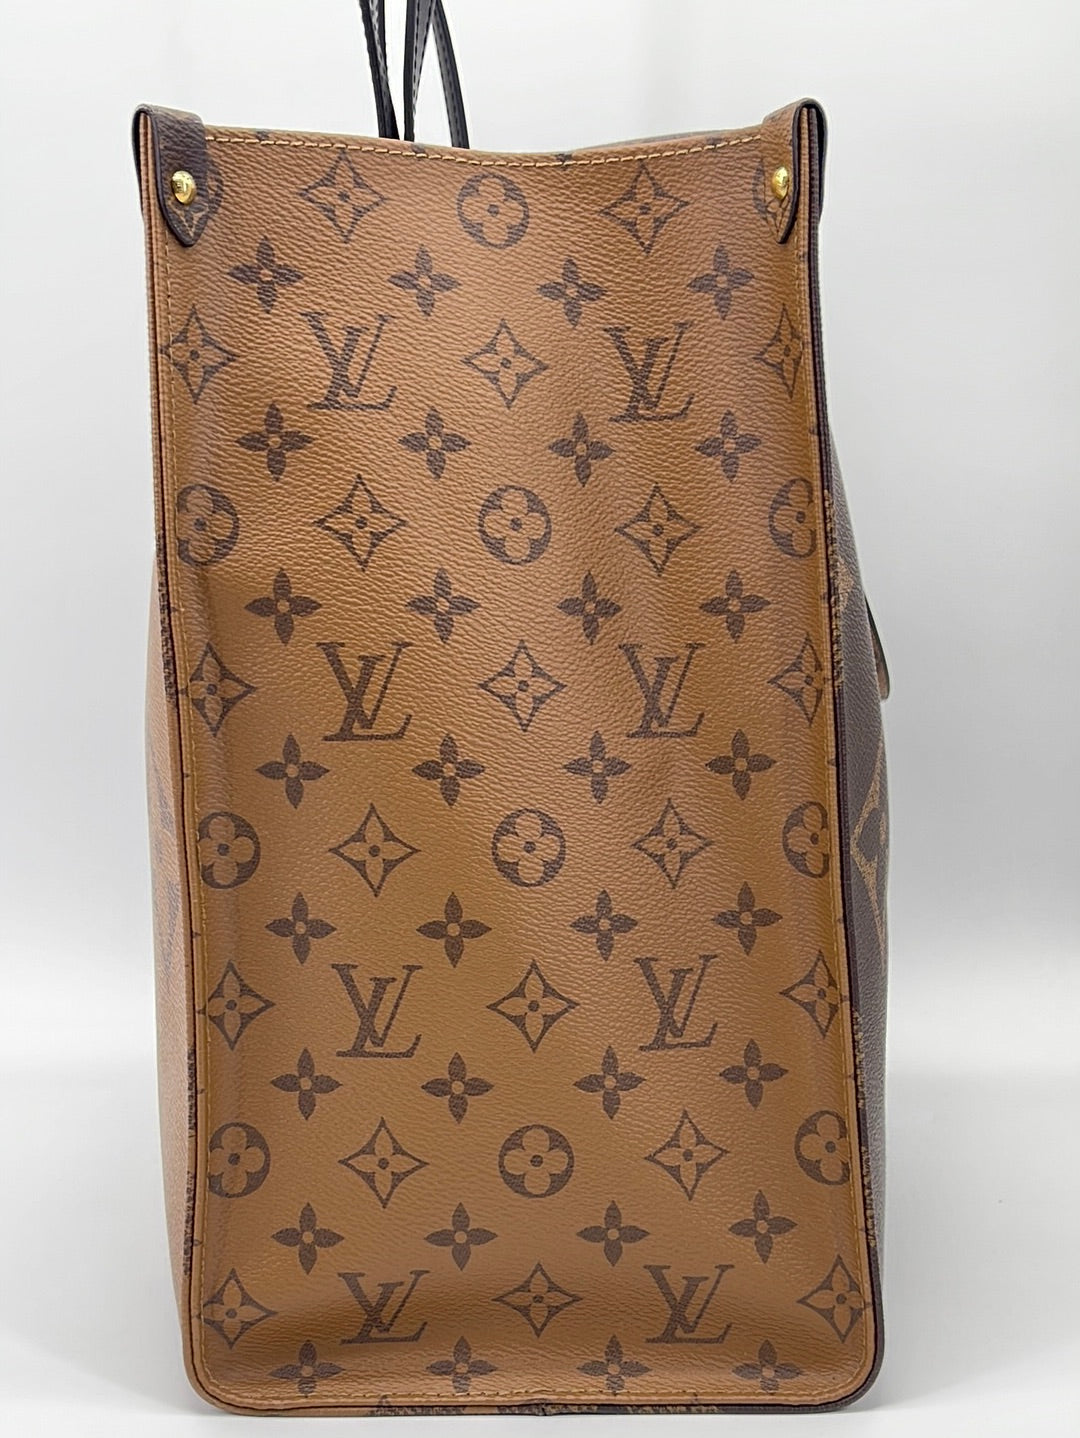 Louis Vuitton Carry It VHS Video Tape Reverse Monogram Tote Bag